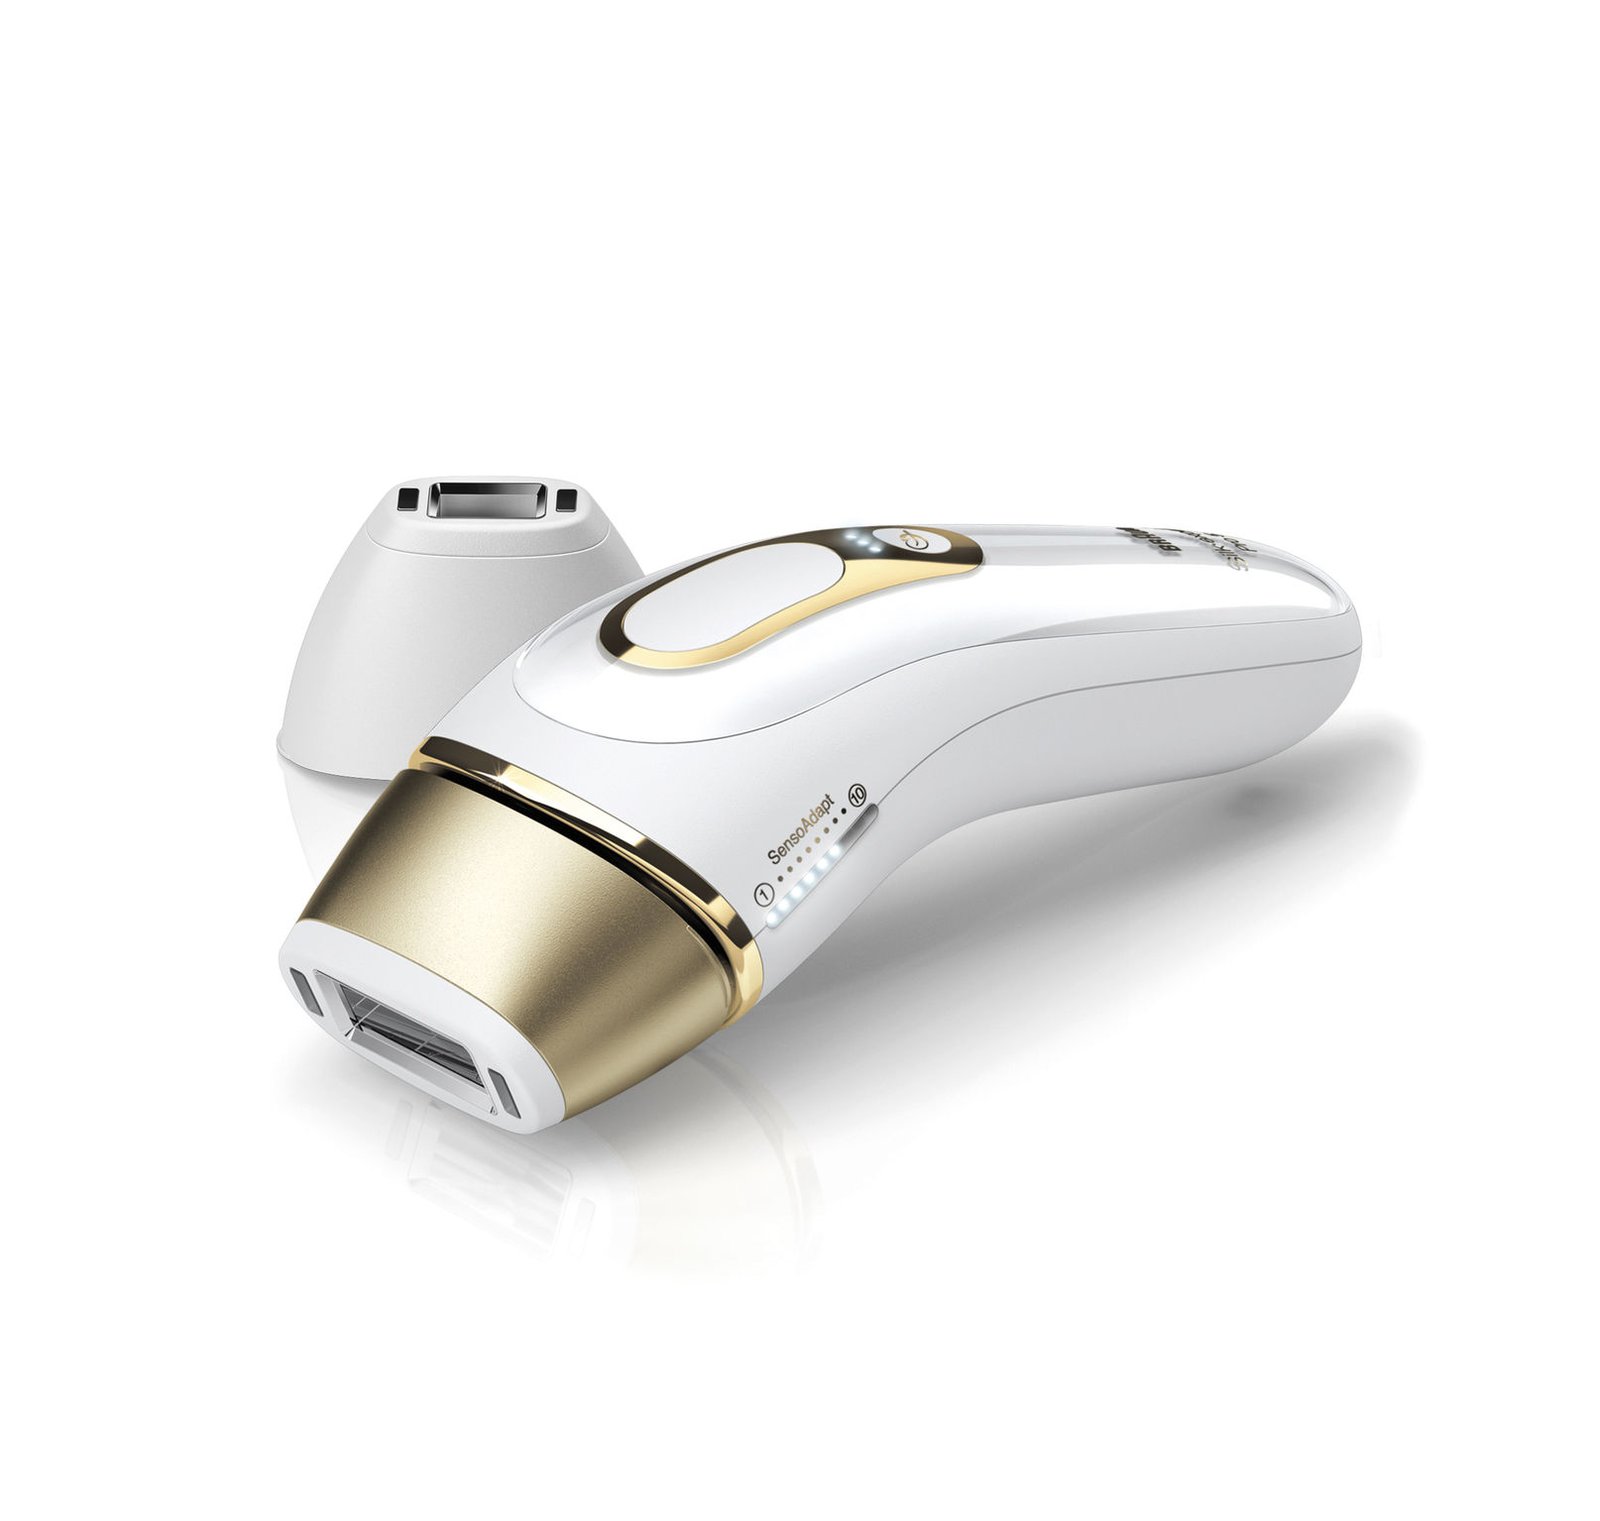 Braun Silk-expert Pro 5 IPL | SONIC CATHEDRAL Laser Technology